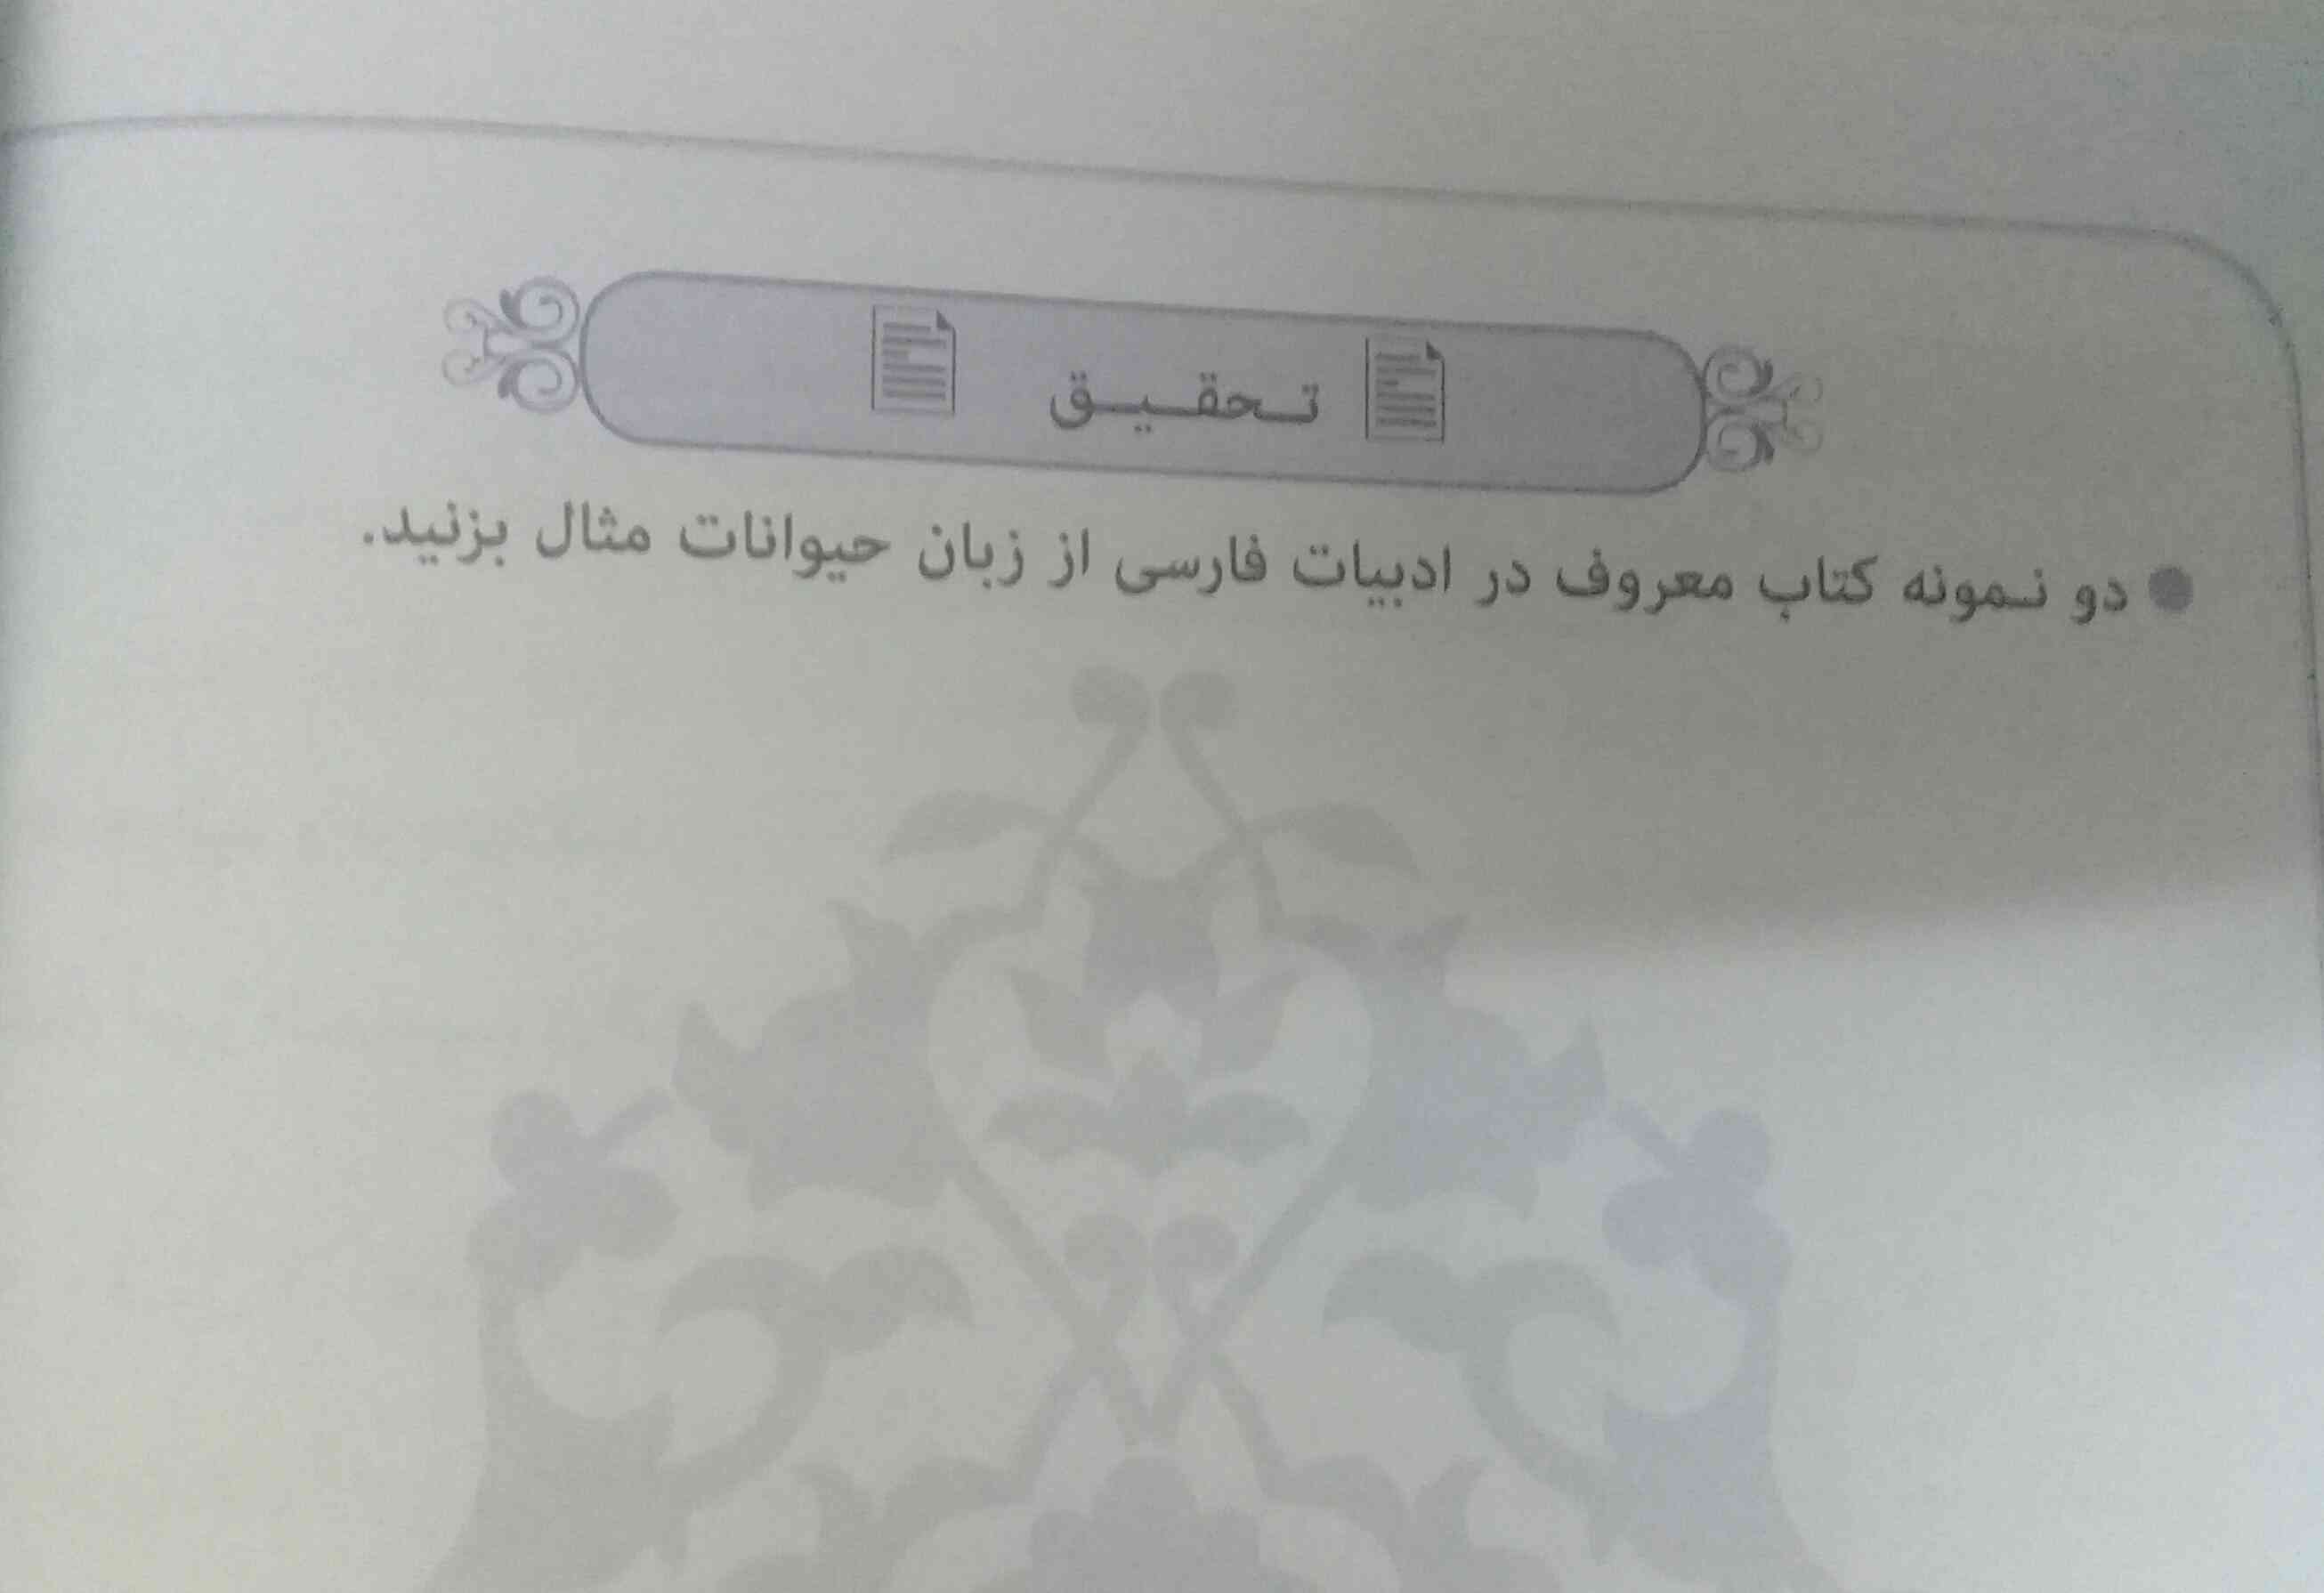 سلام لطفا جواب تحقیق عربی صفحه ۶۰ رو بگید ممنون 